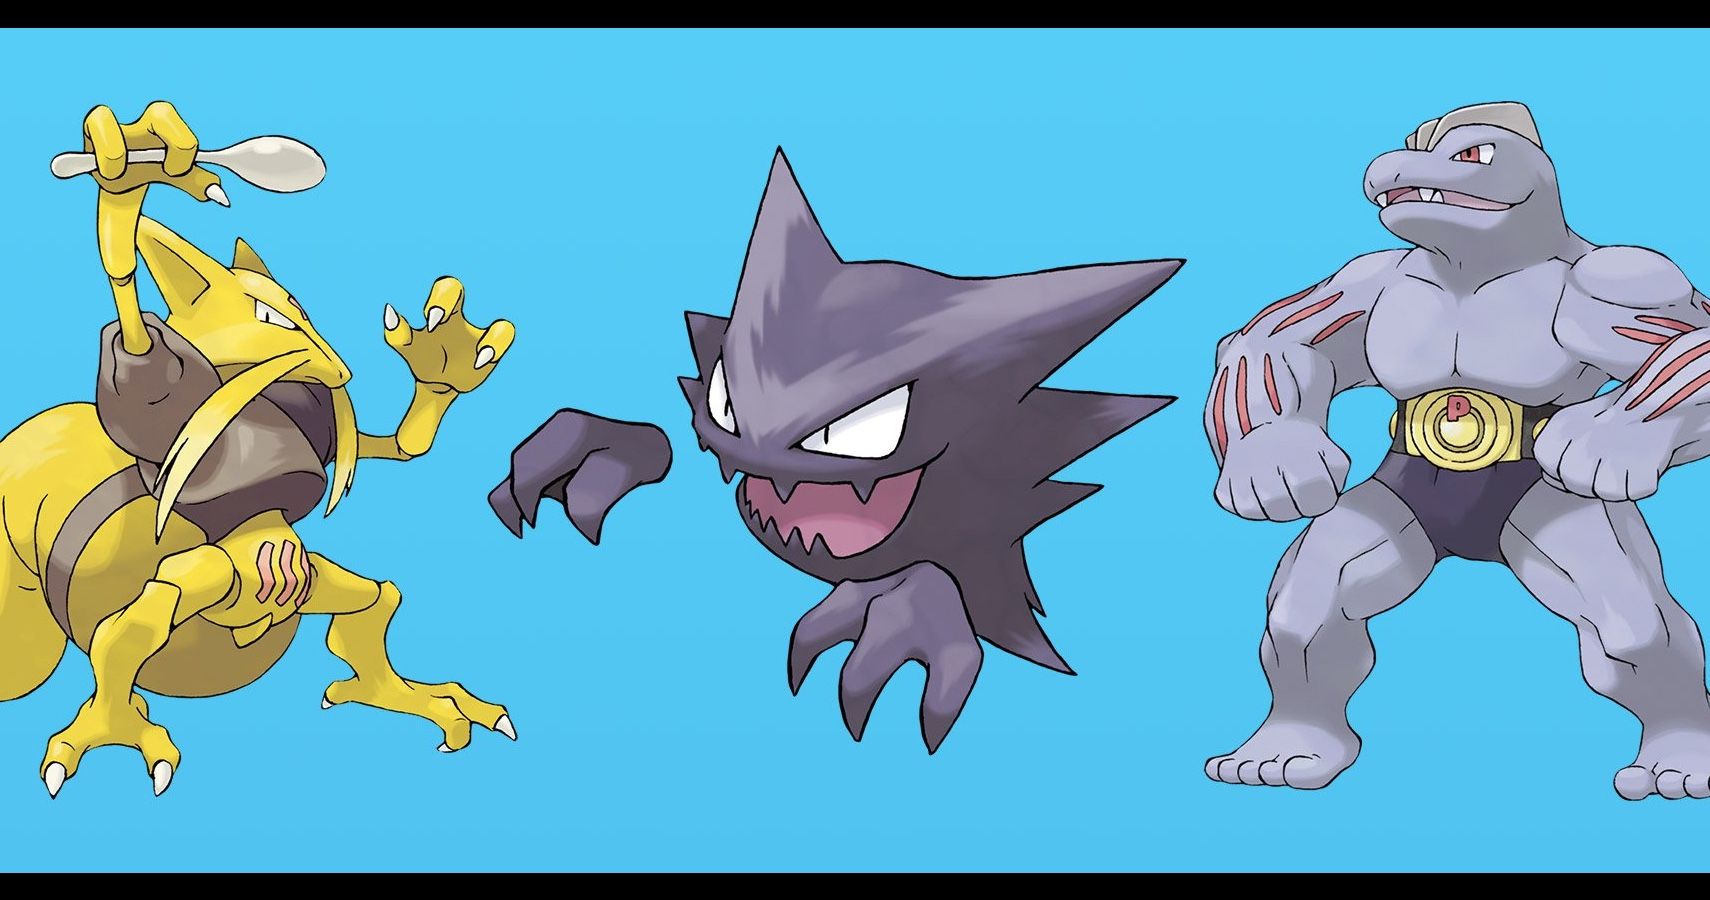 Kadabra, Haunter and Machoke from Pokemon.